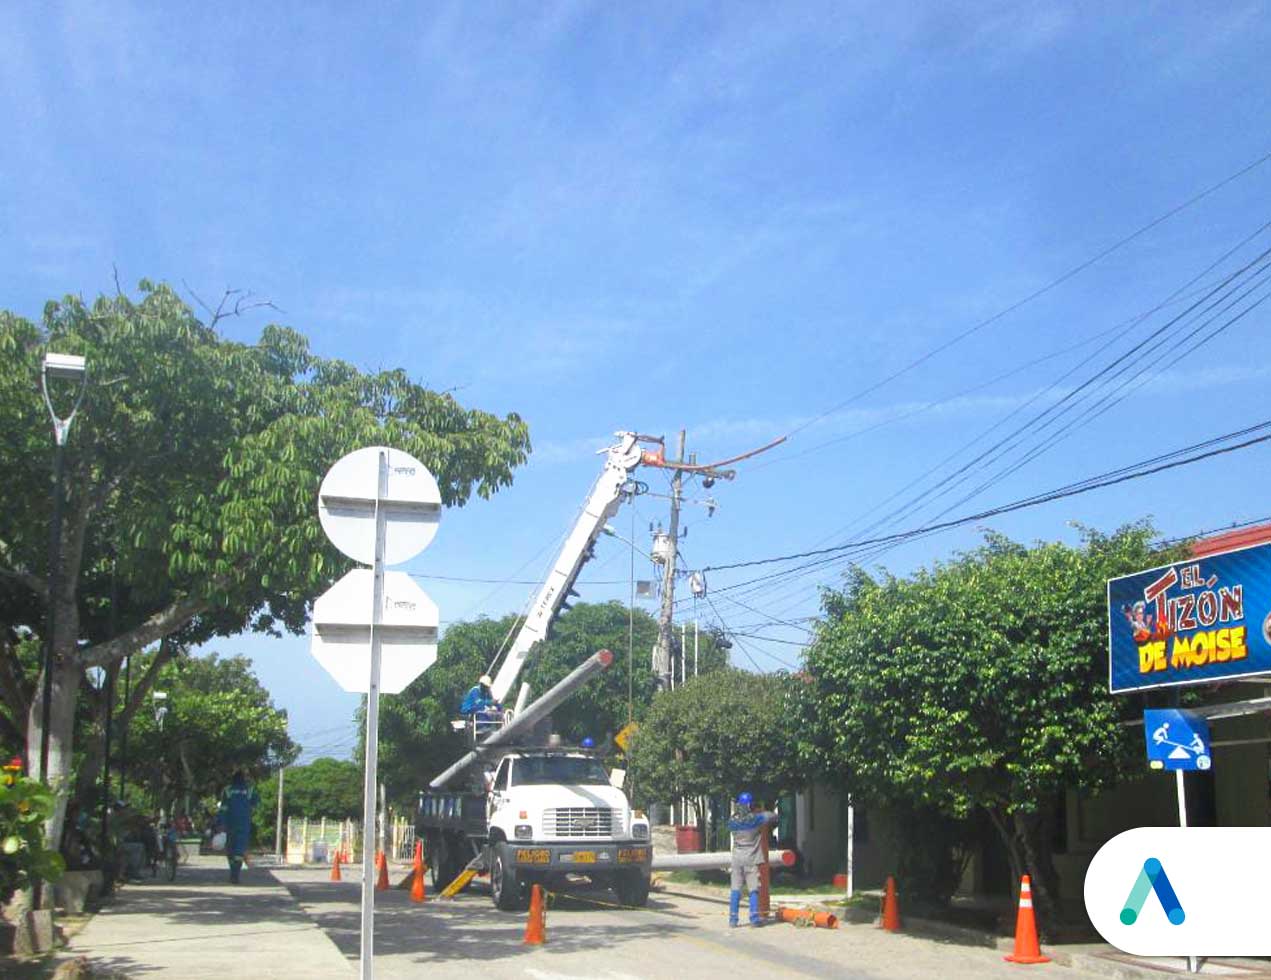 En zona comercial de Galapa, Air-e trabaja en remodelación de redes eléctricas